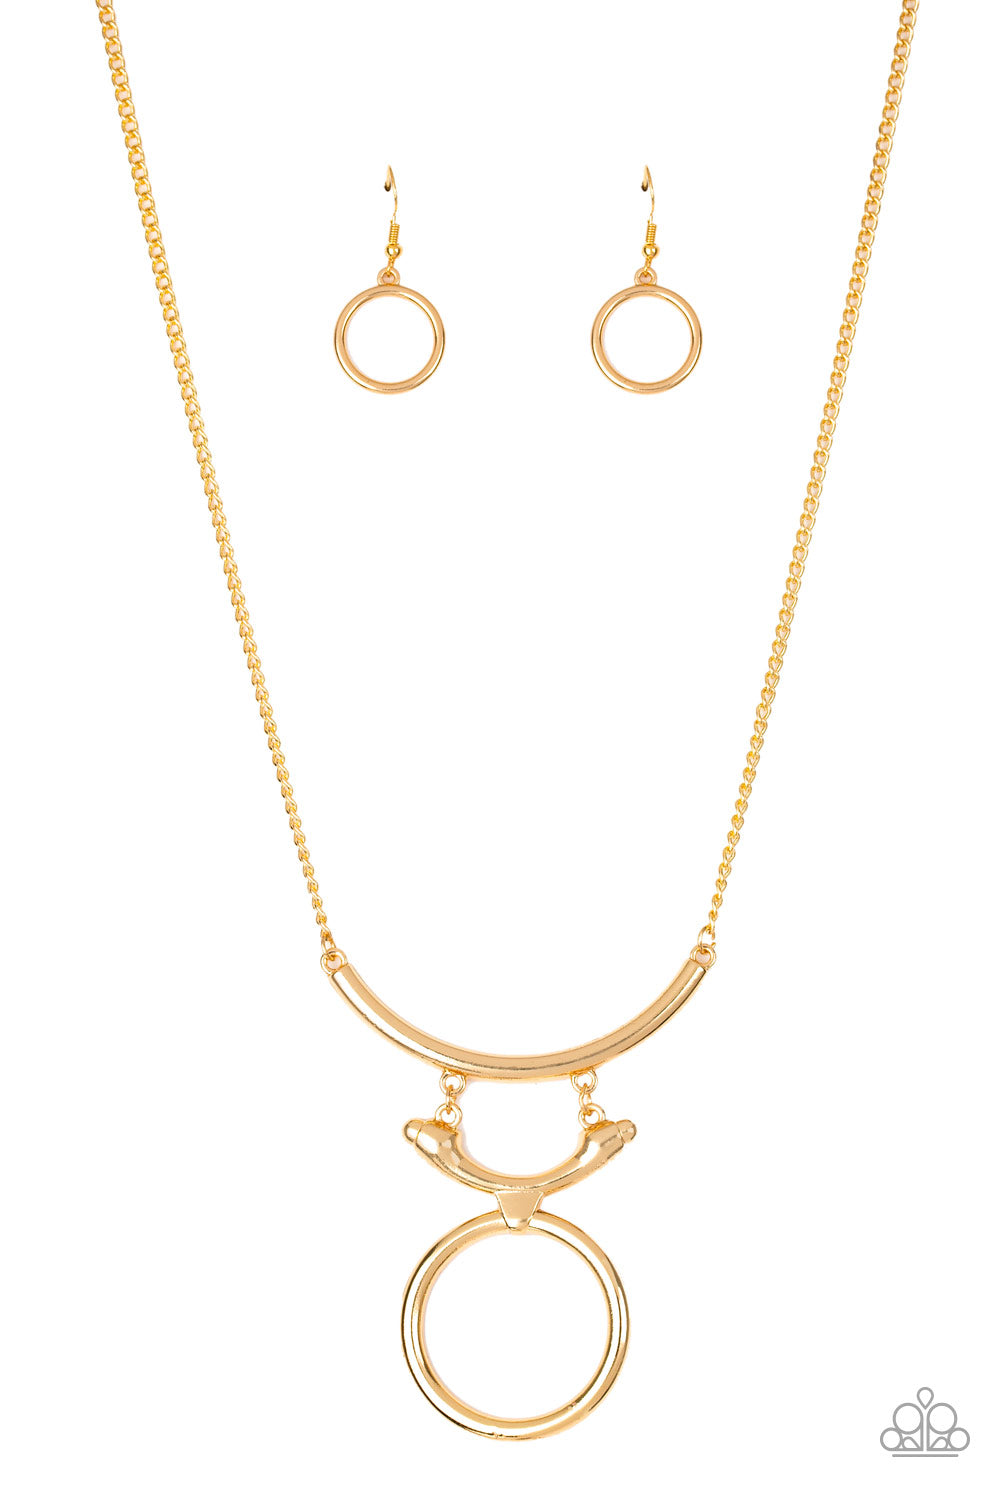 Walk Like An Egyptian - Gold Necklace Set - Princess Glam Shop